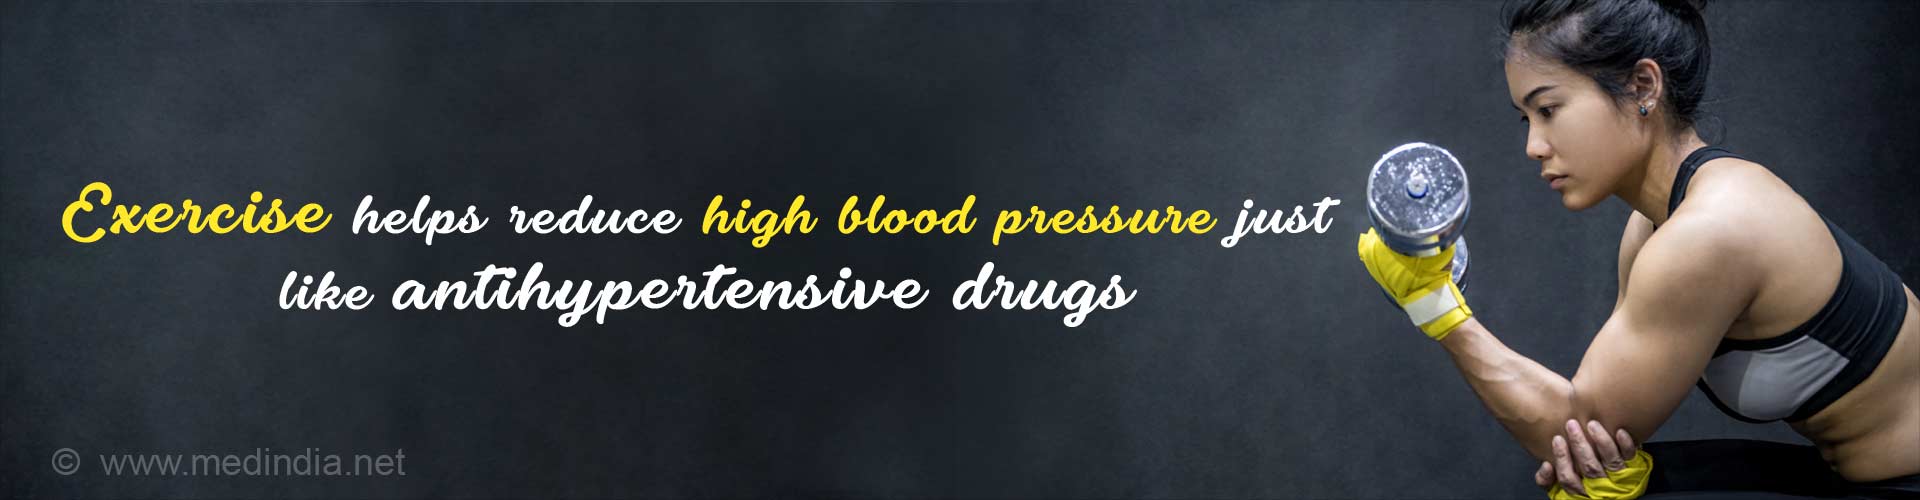 Exercise helps reduce high blood pressure just like antihypertensive drugs.